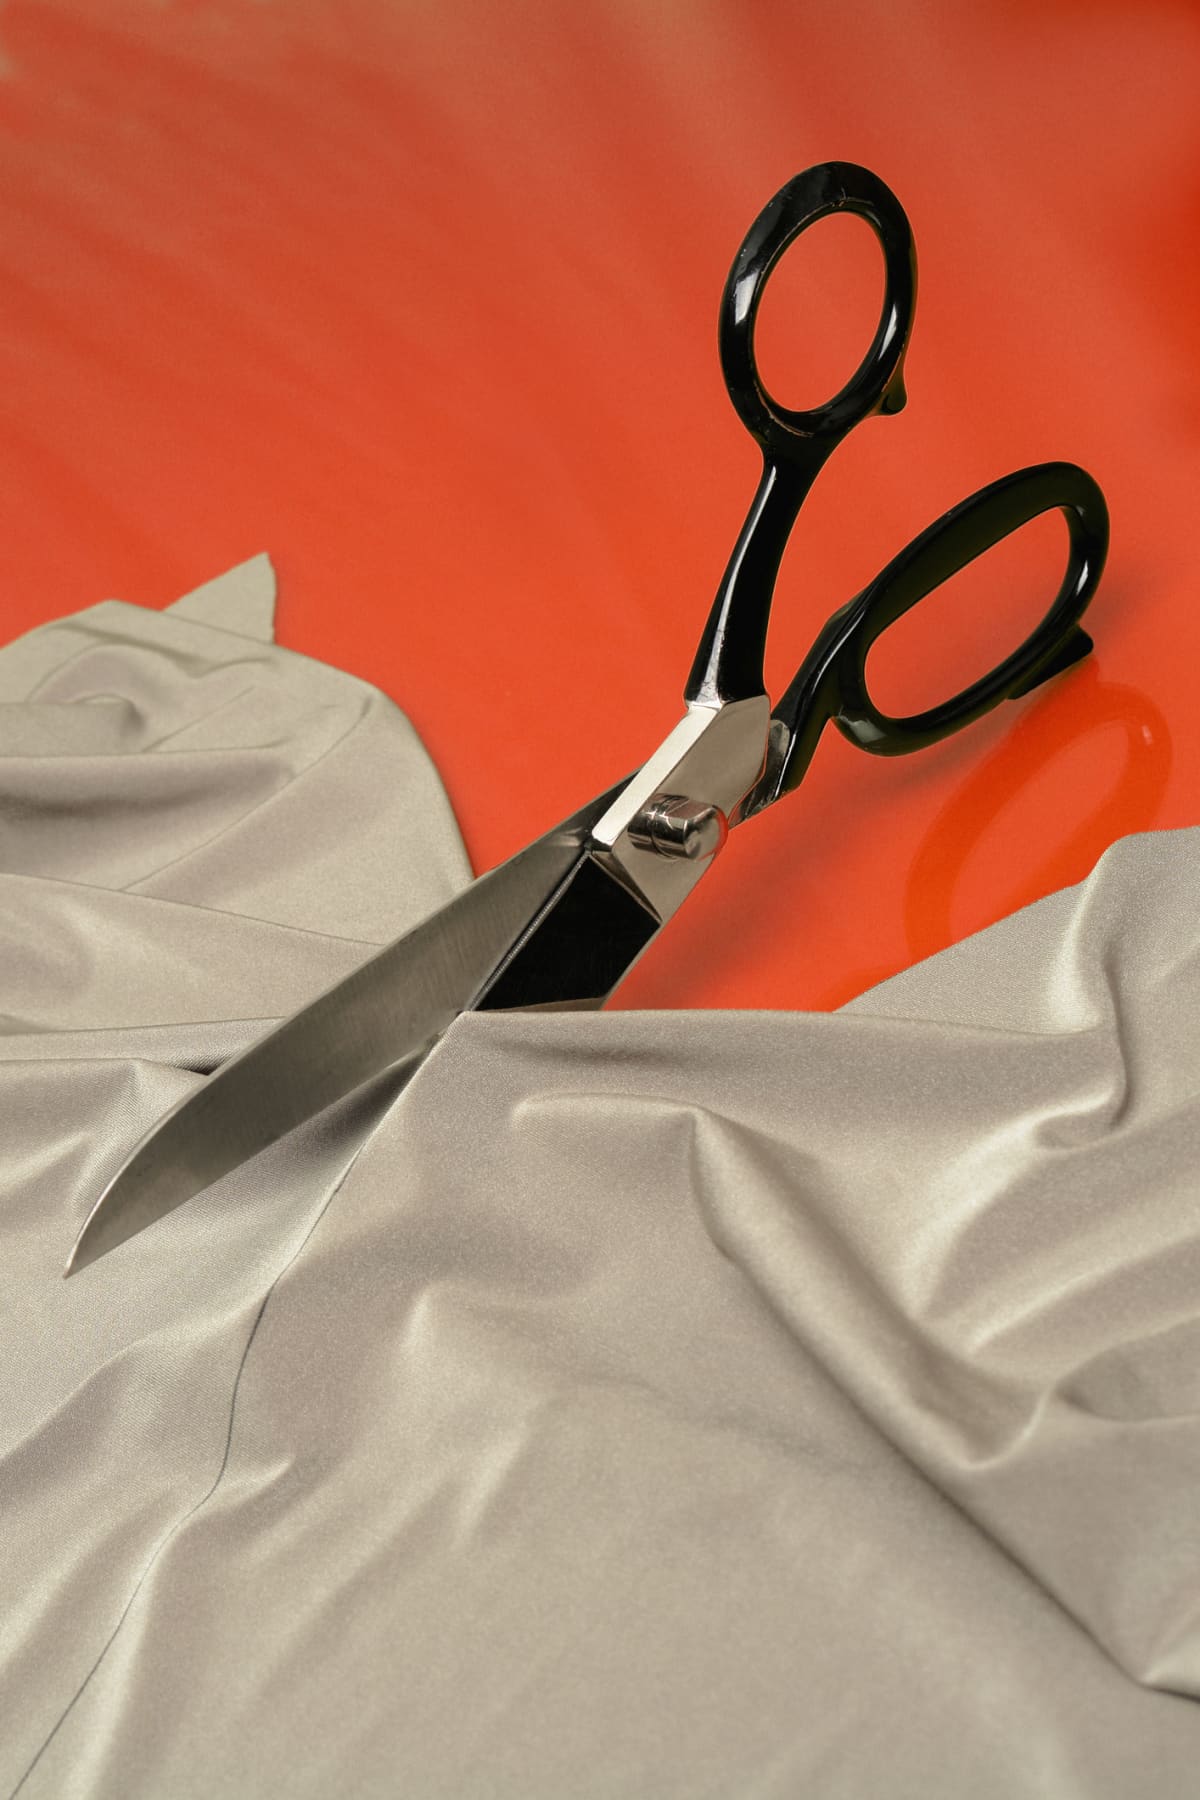 Scissors cutting fabric on an orange background